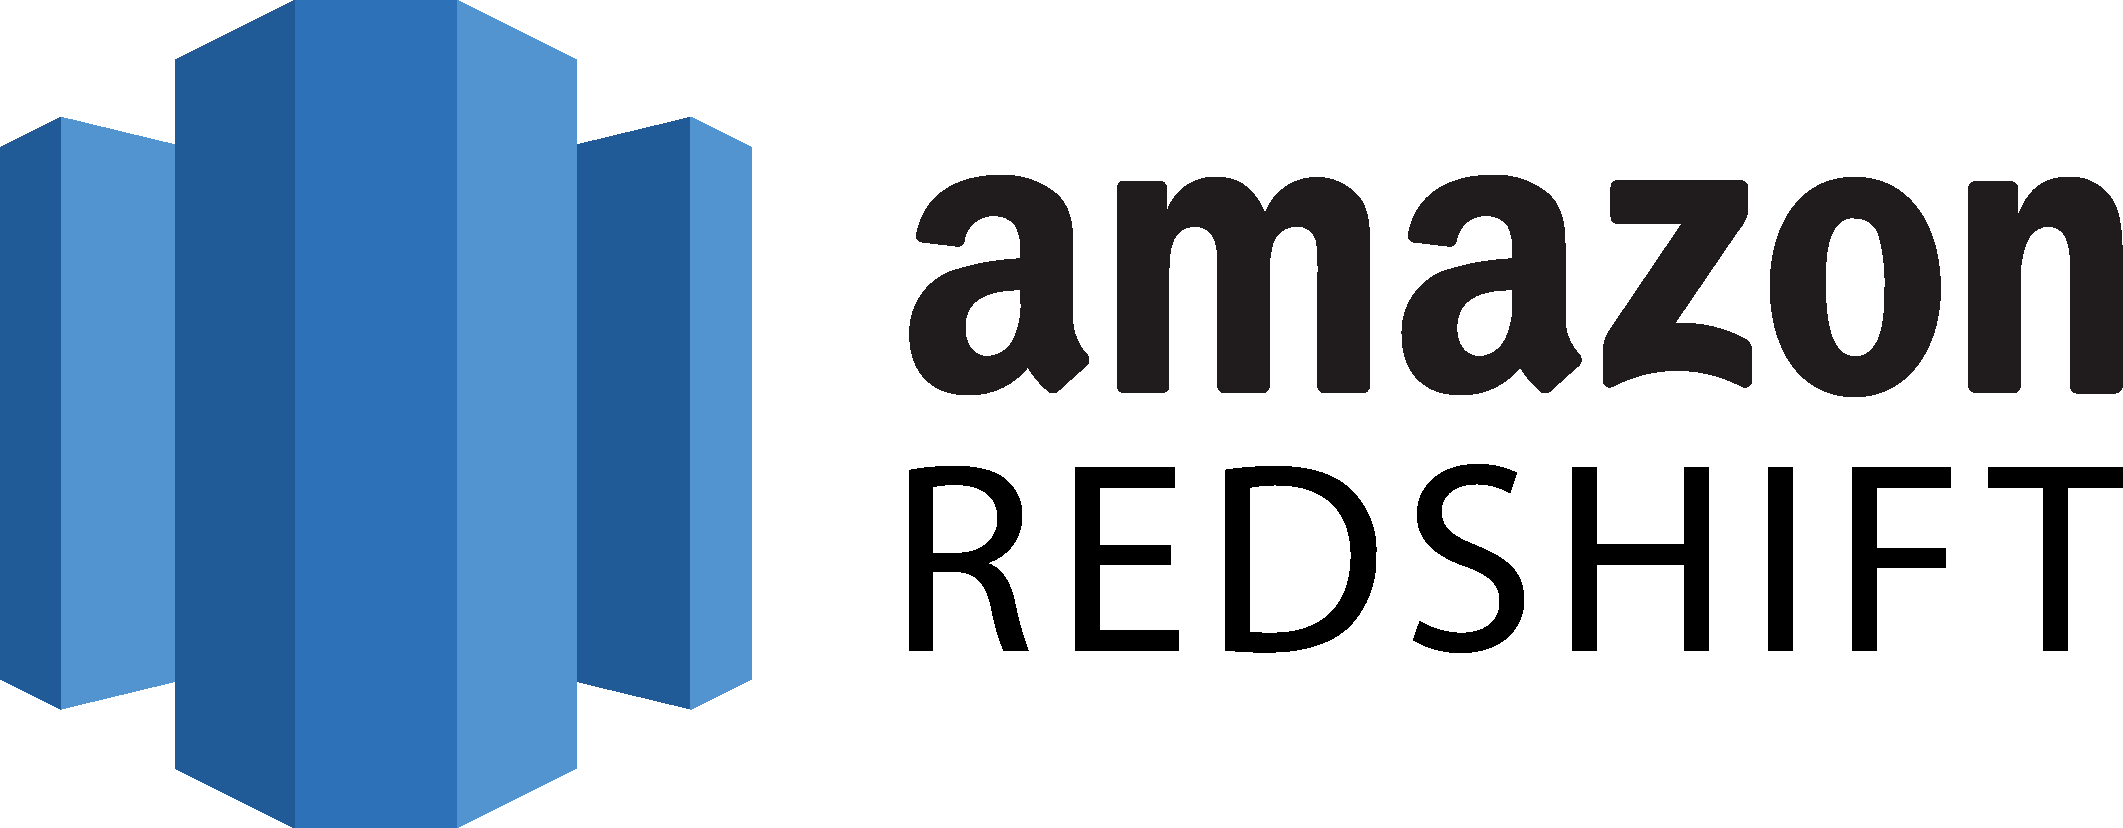 Amazon Redshift Logo png